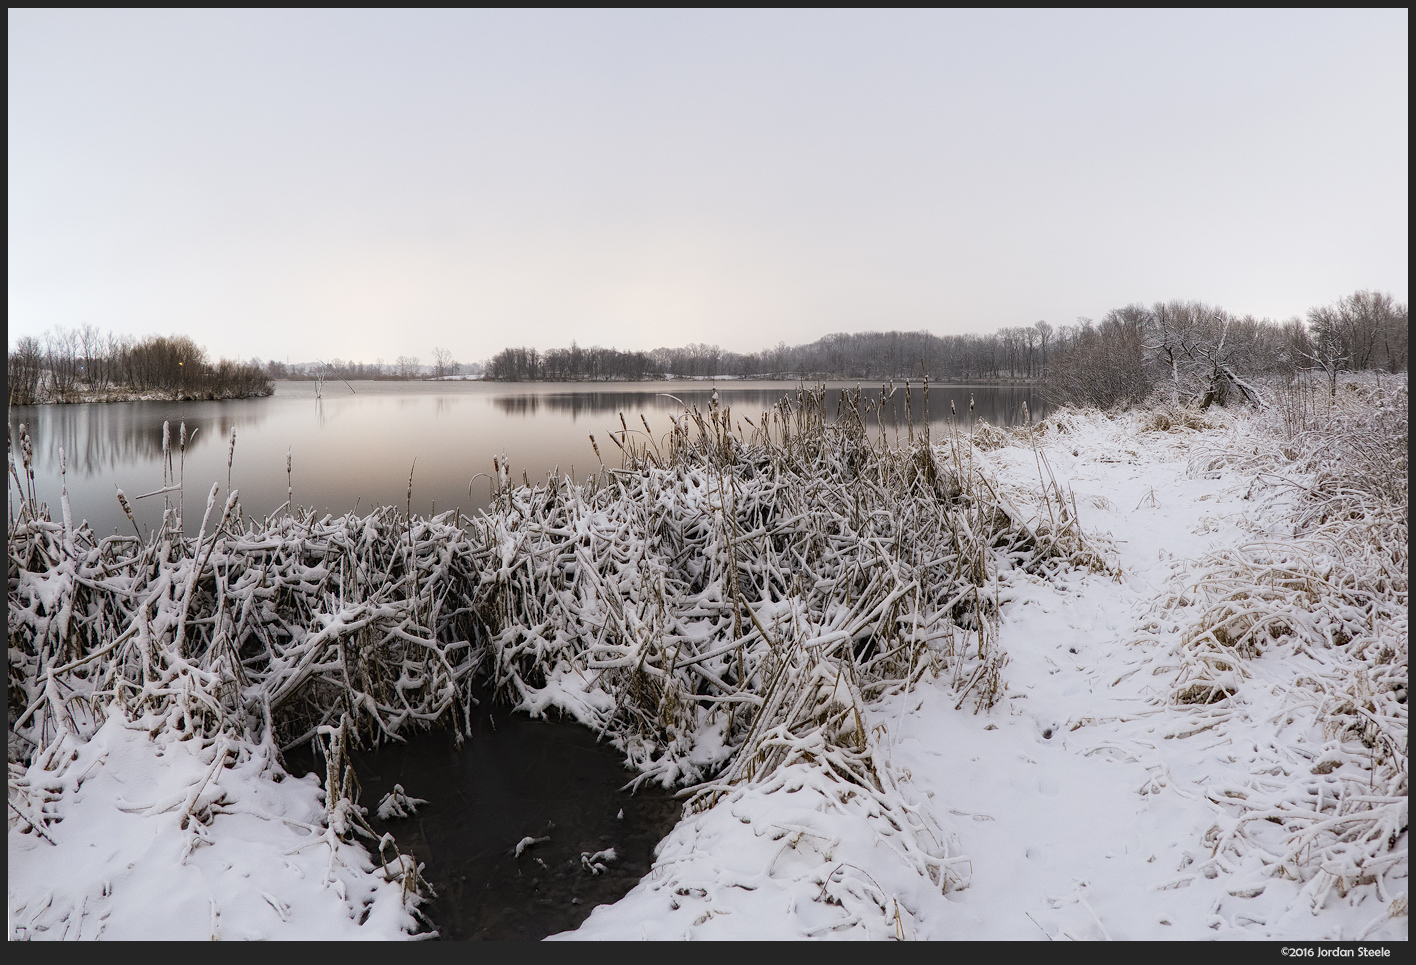 Winter at Pickerington Ponds - Olympus OM-D E-M10 Mark II with Olympus 8mm f/1.8 Fisheye PRO @ f/5.6